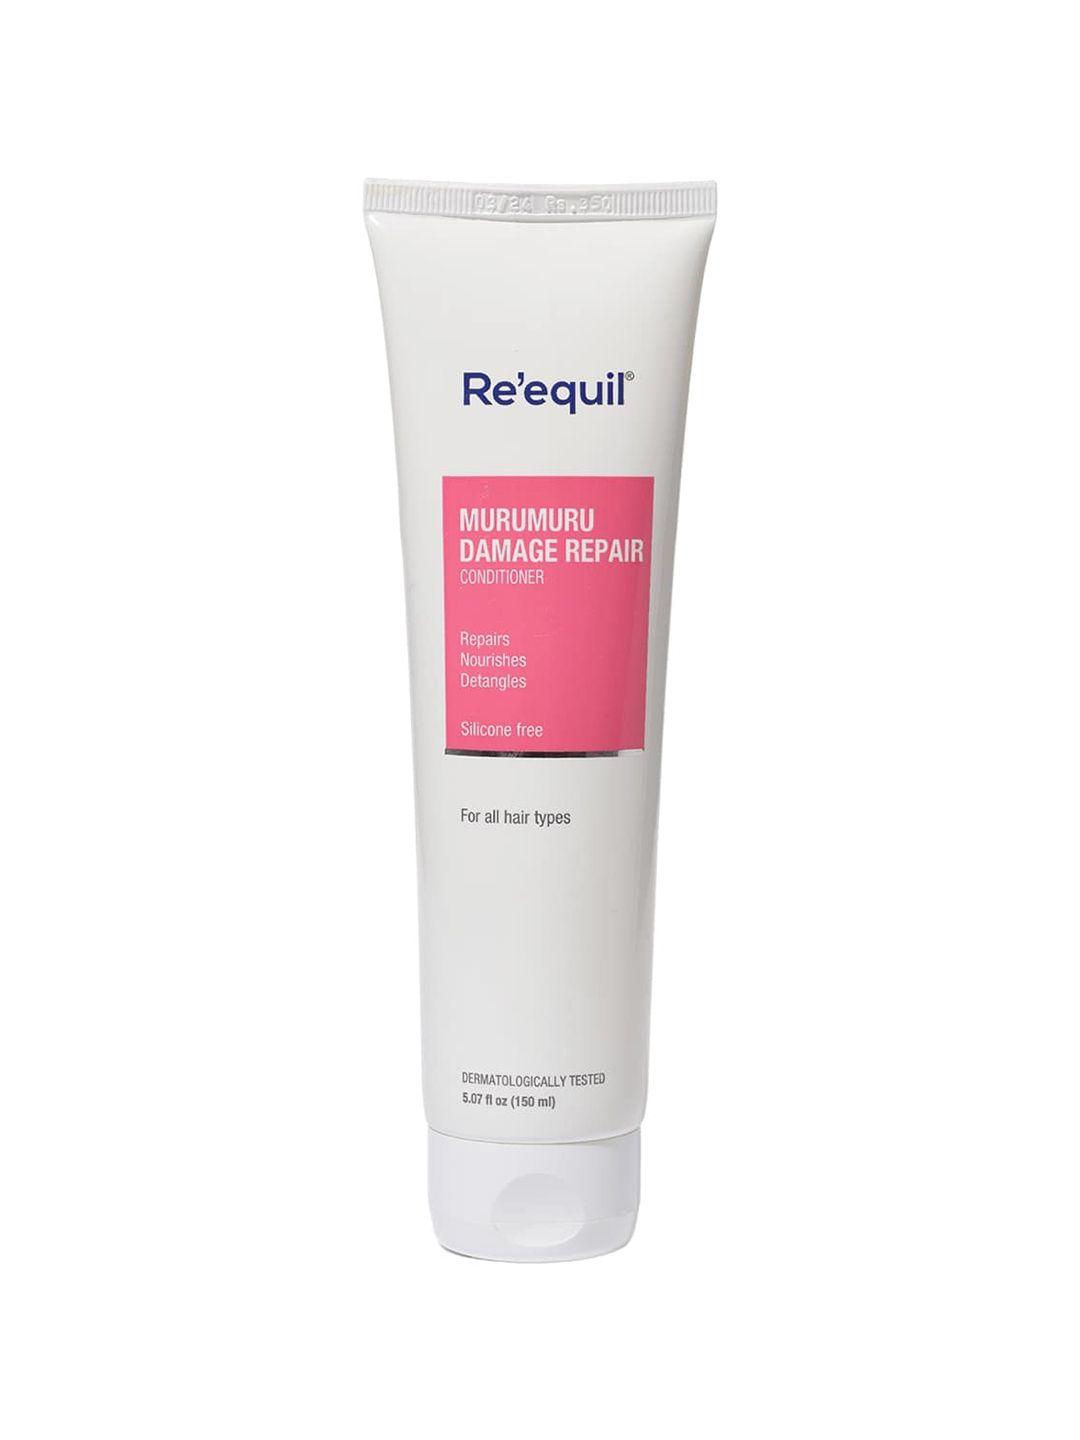 reequil-murumuru-damage-repair-hair-conditioner-with-aspartic-acid